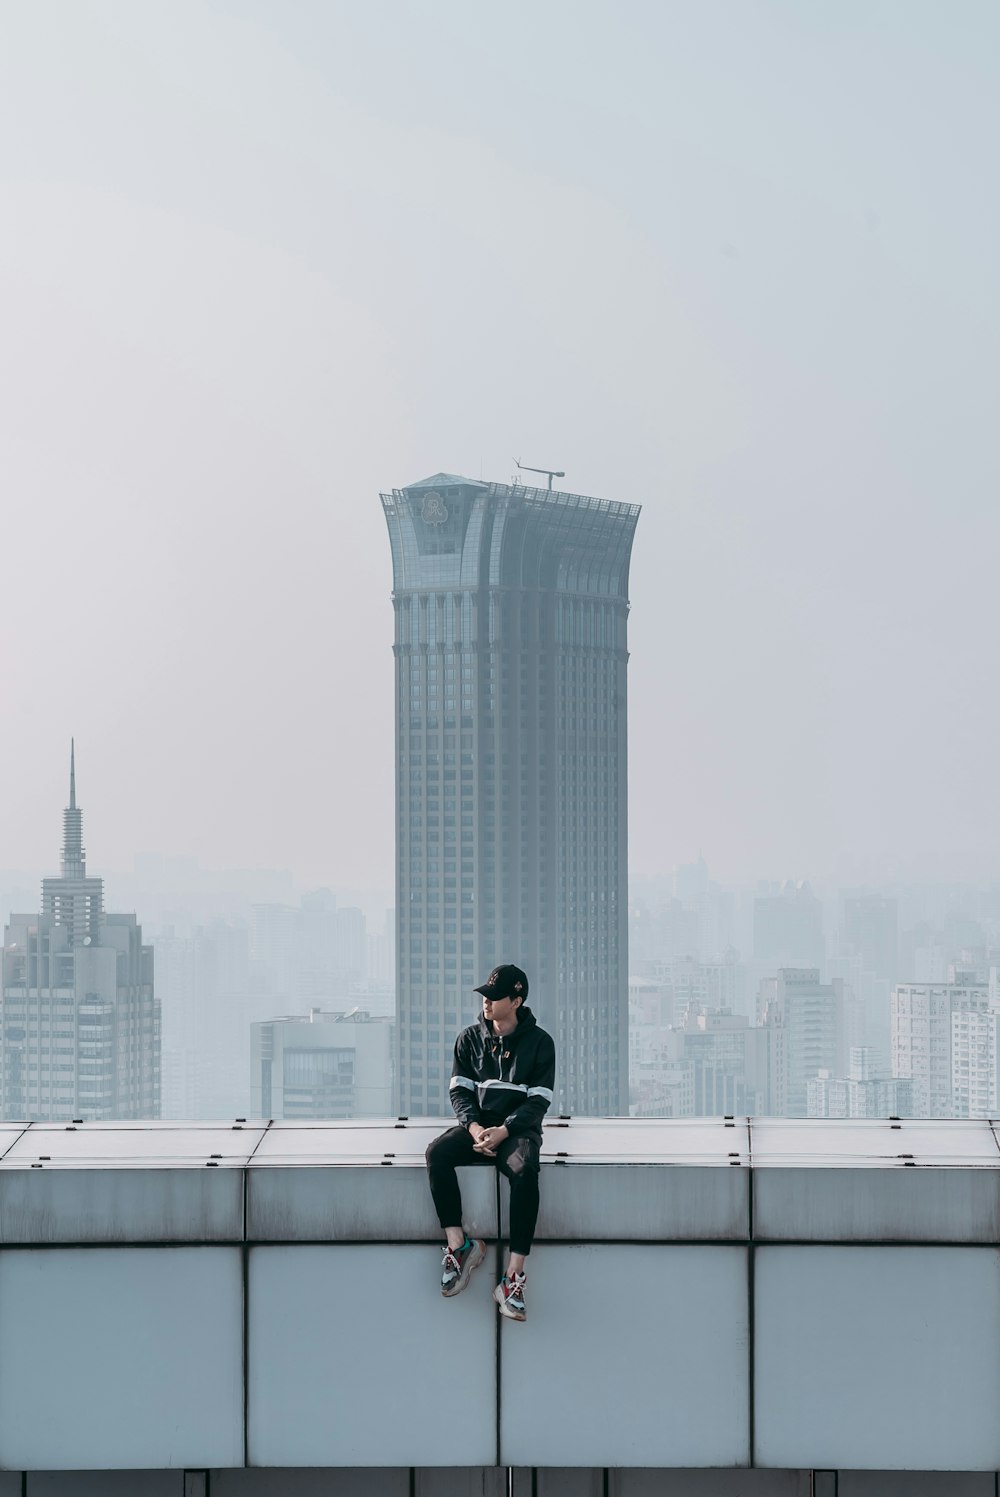 man in black coat sitting on concrete fence near concrete building